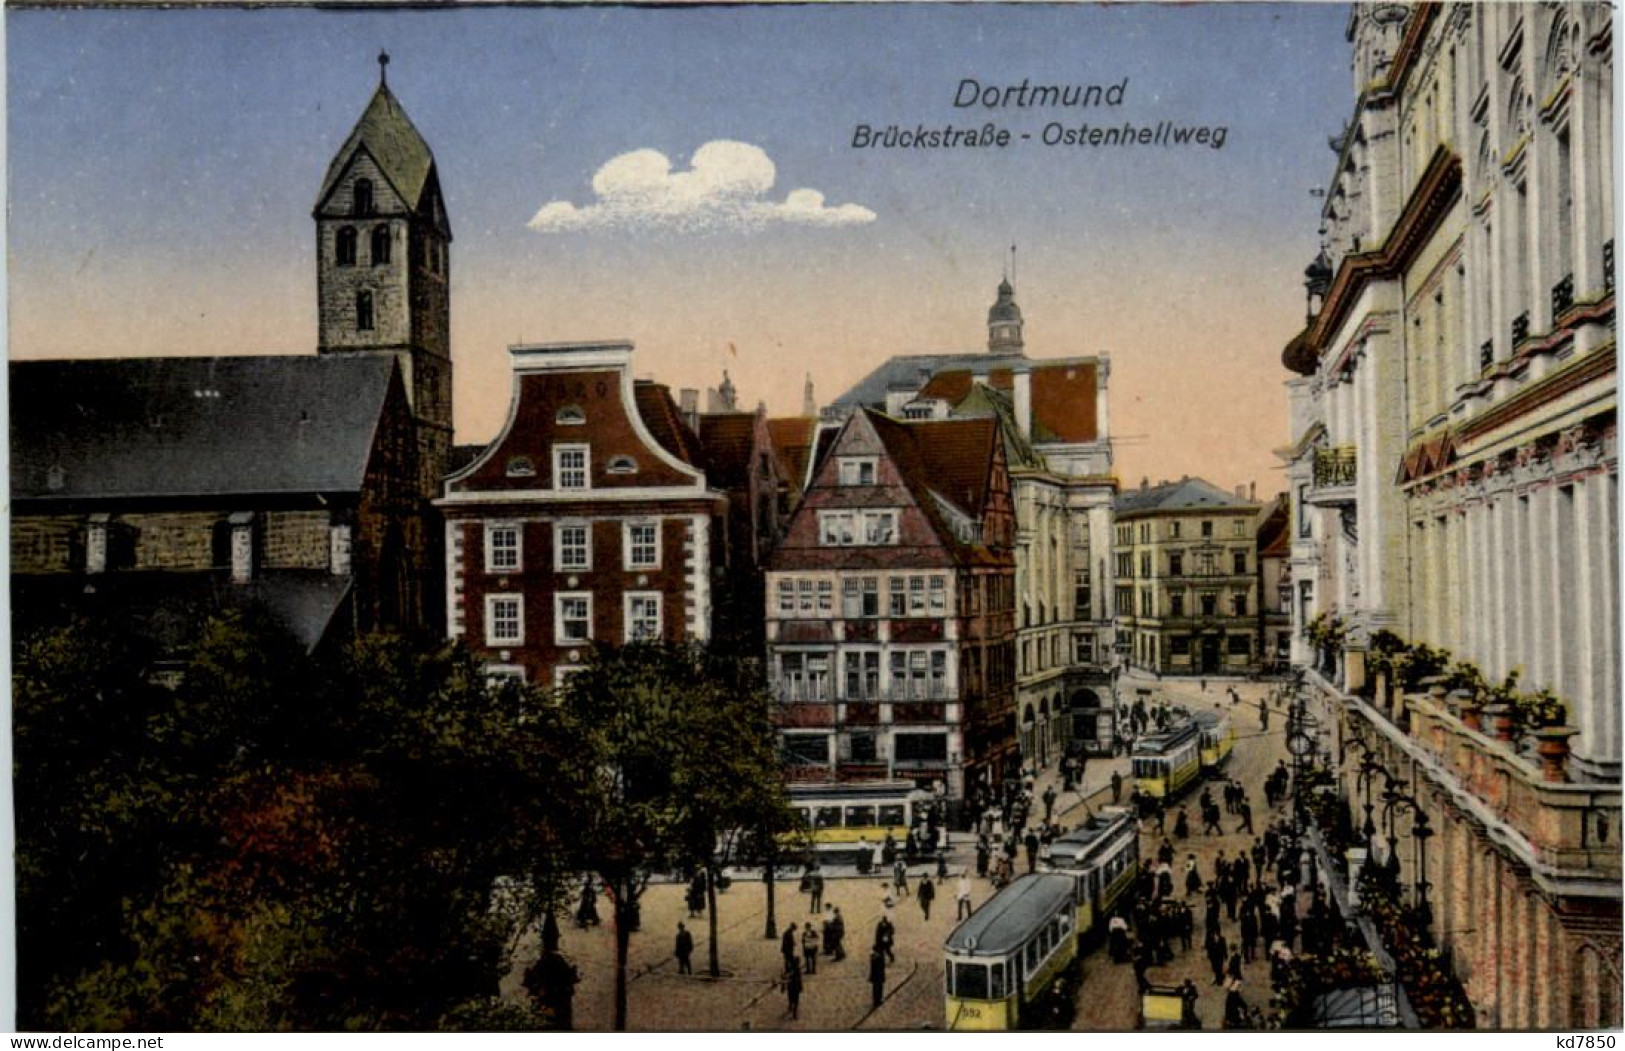 Dortmund - Brückstrasse - Dortmund